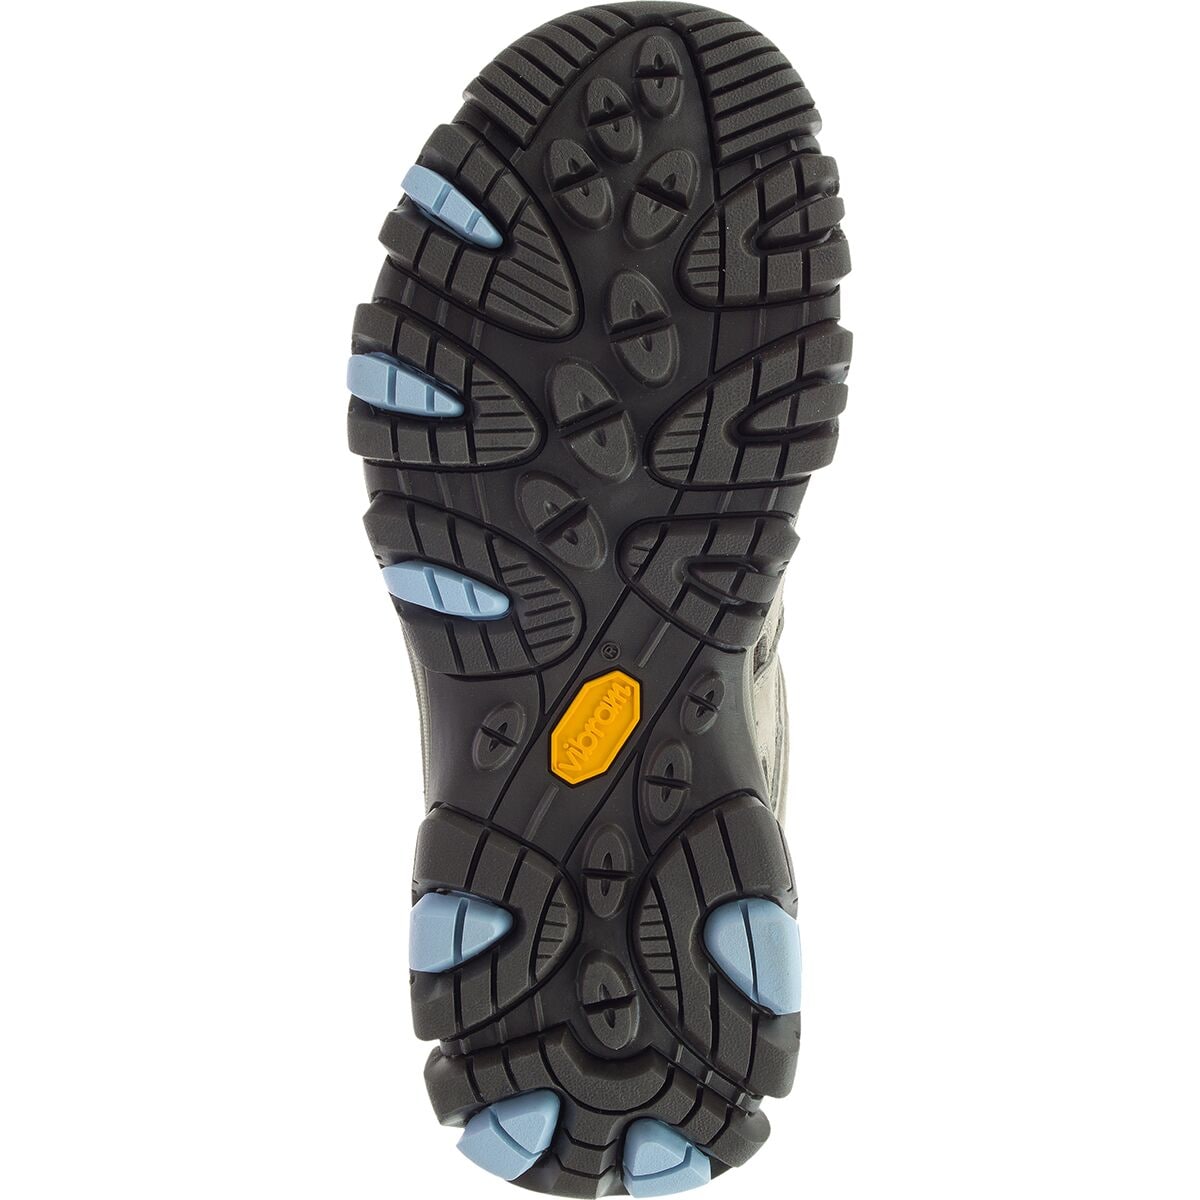 Preference Svare Forestående Merrell Moab 3 GTX Hiking Shoe - Women's - Footwear